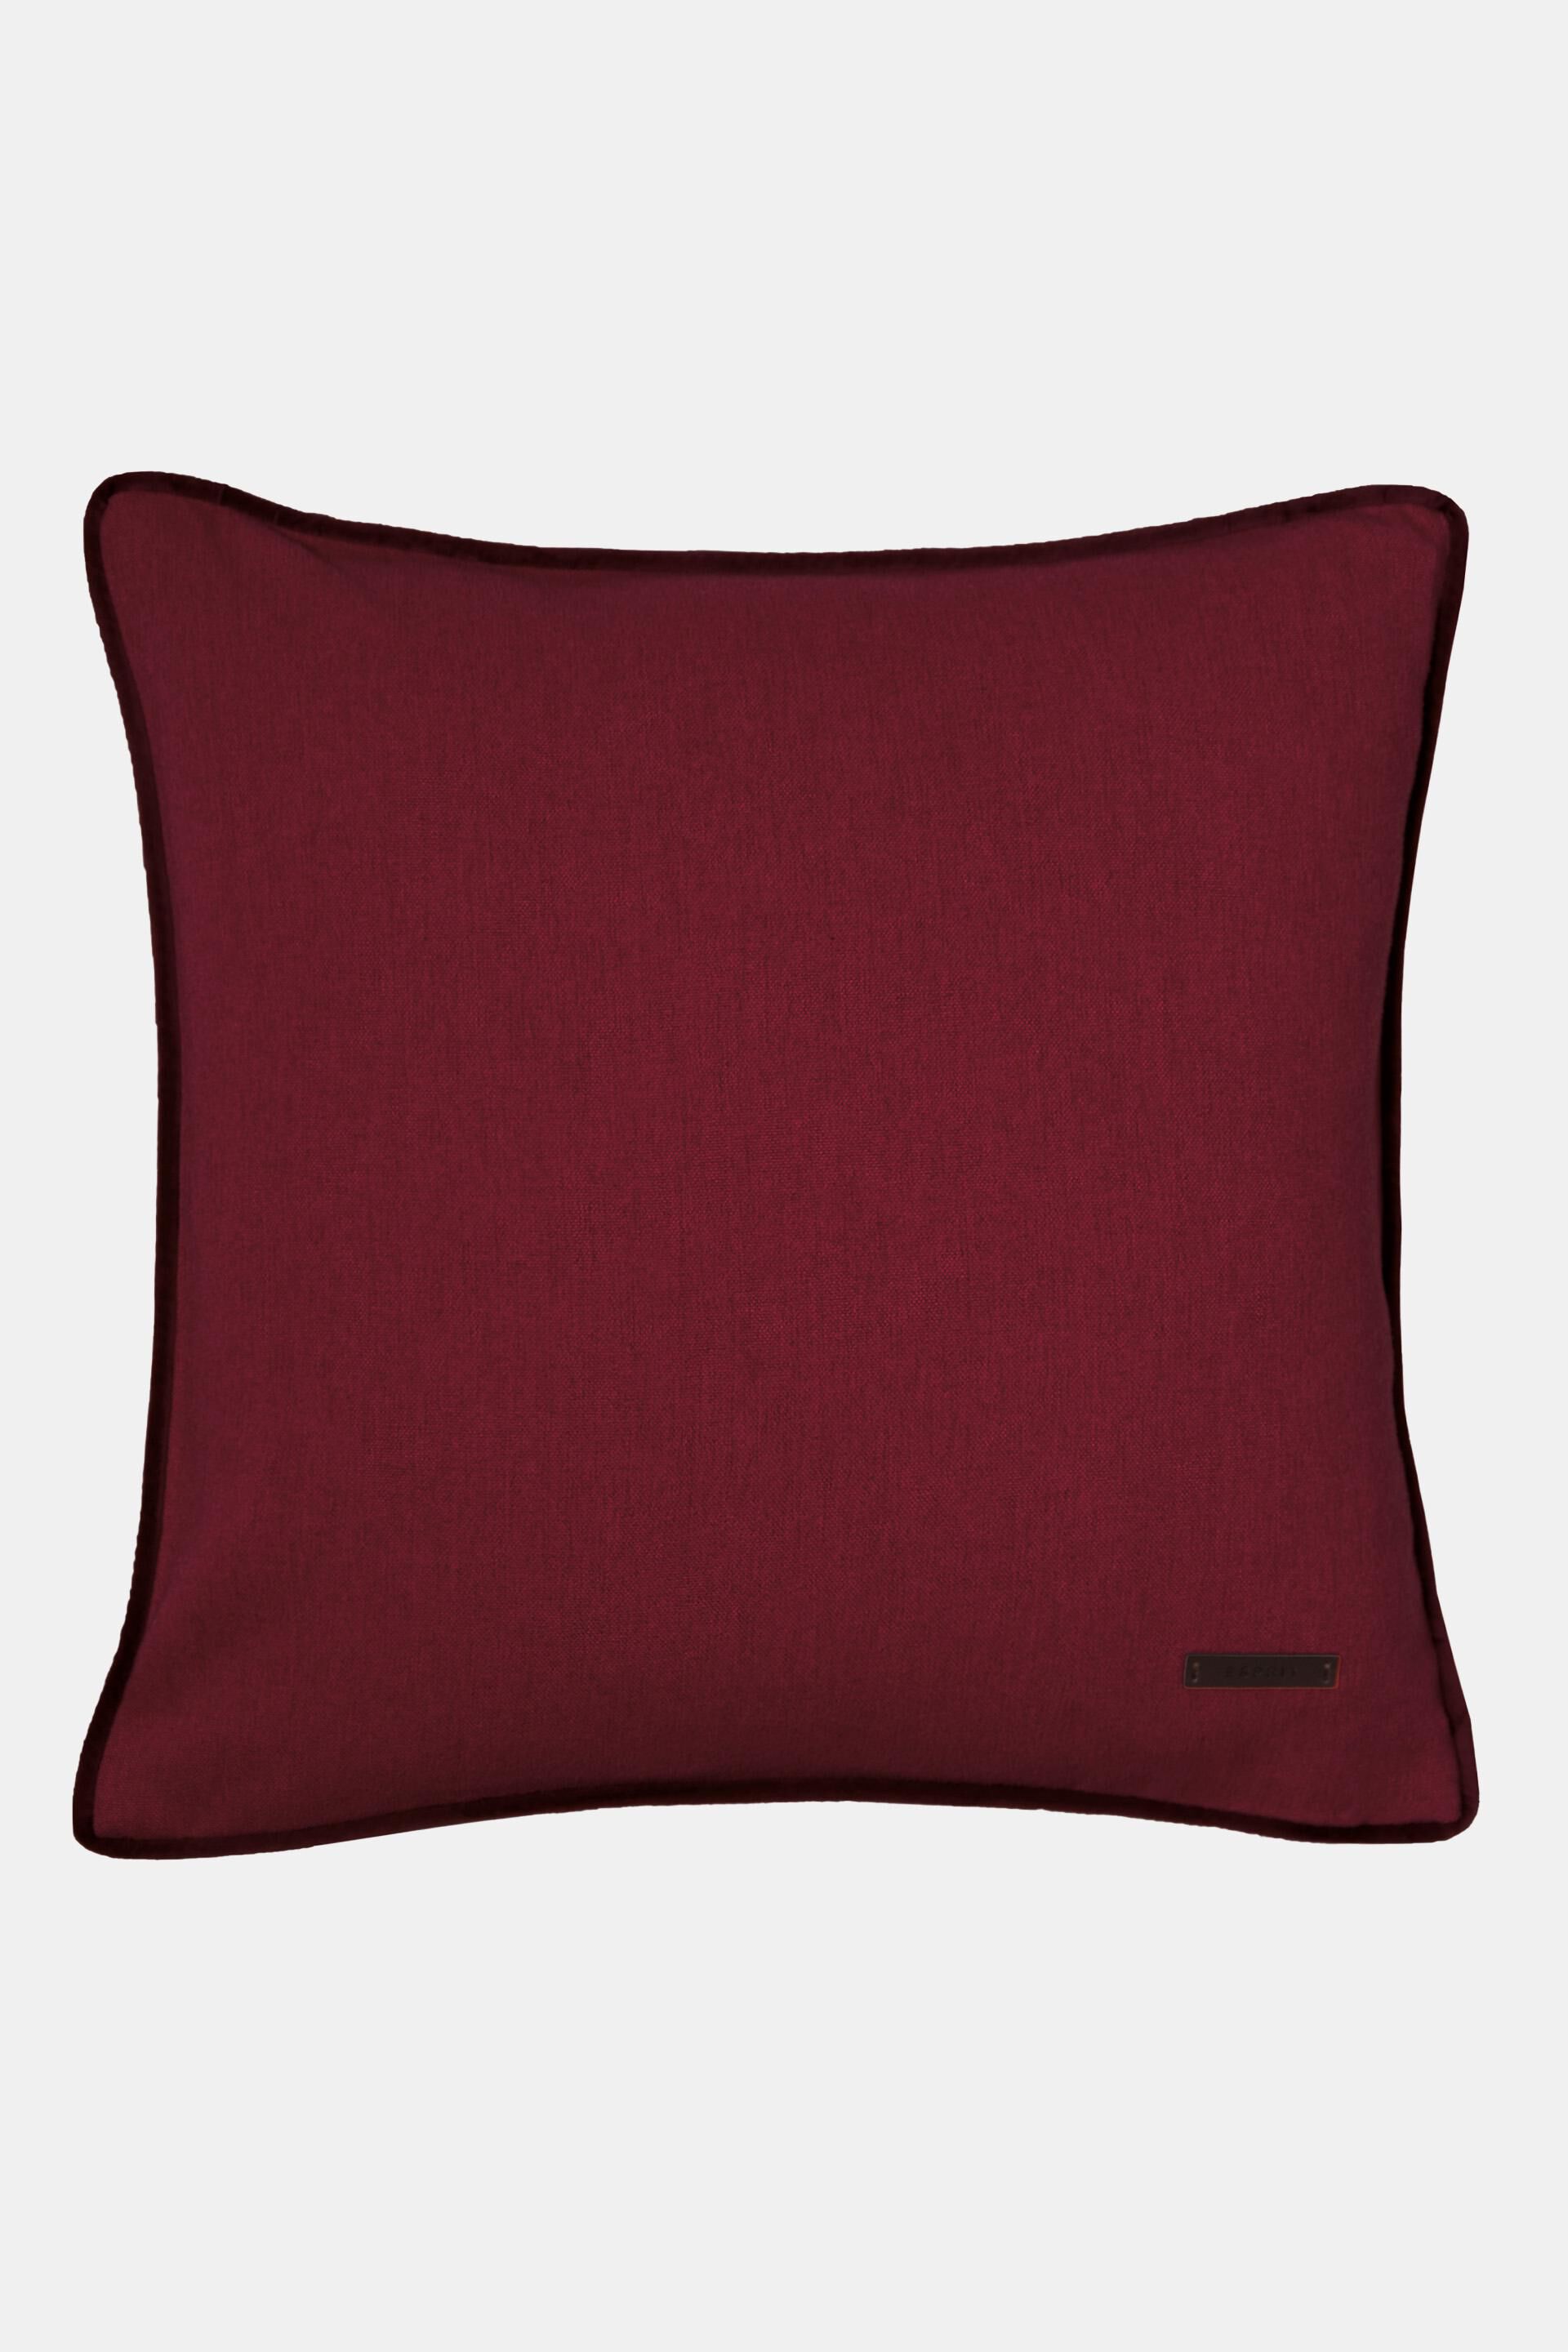 Esprit Winterjacke Damen Decorative cushion cover with velvet piping